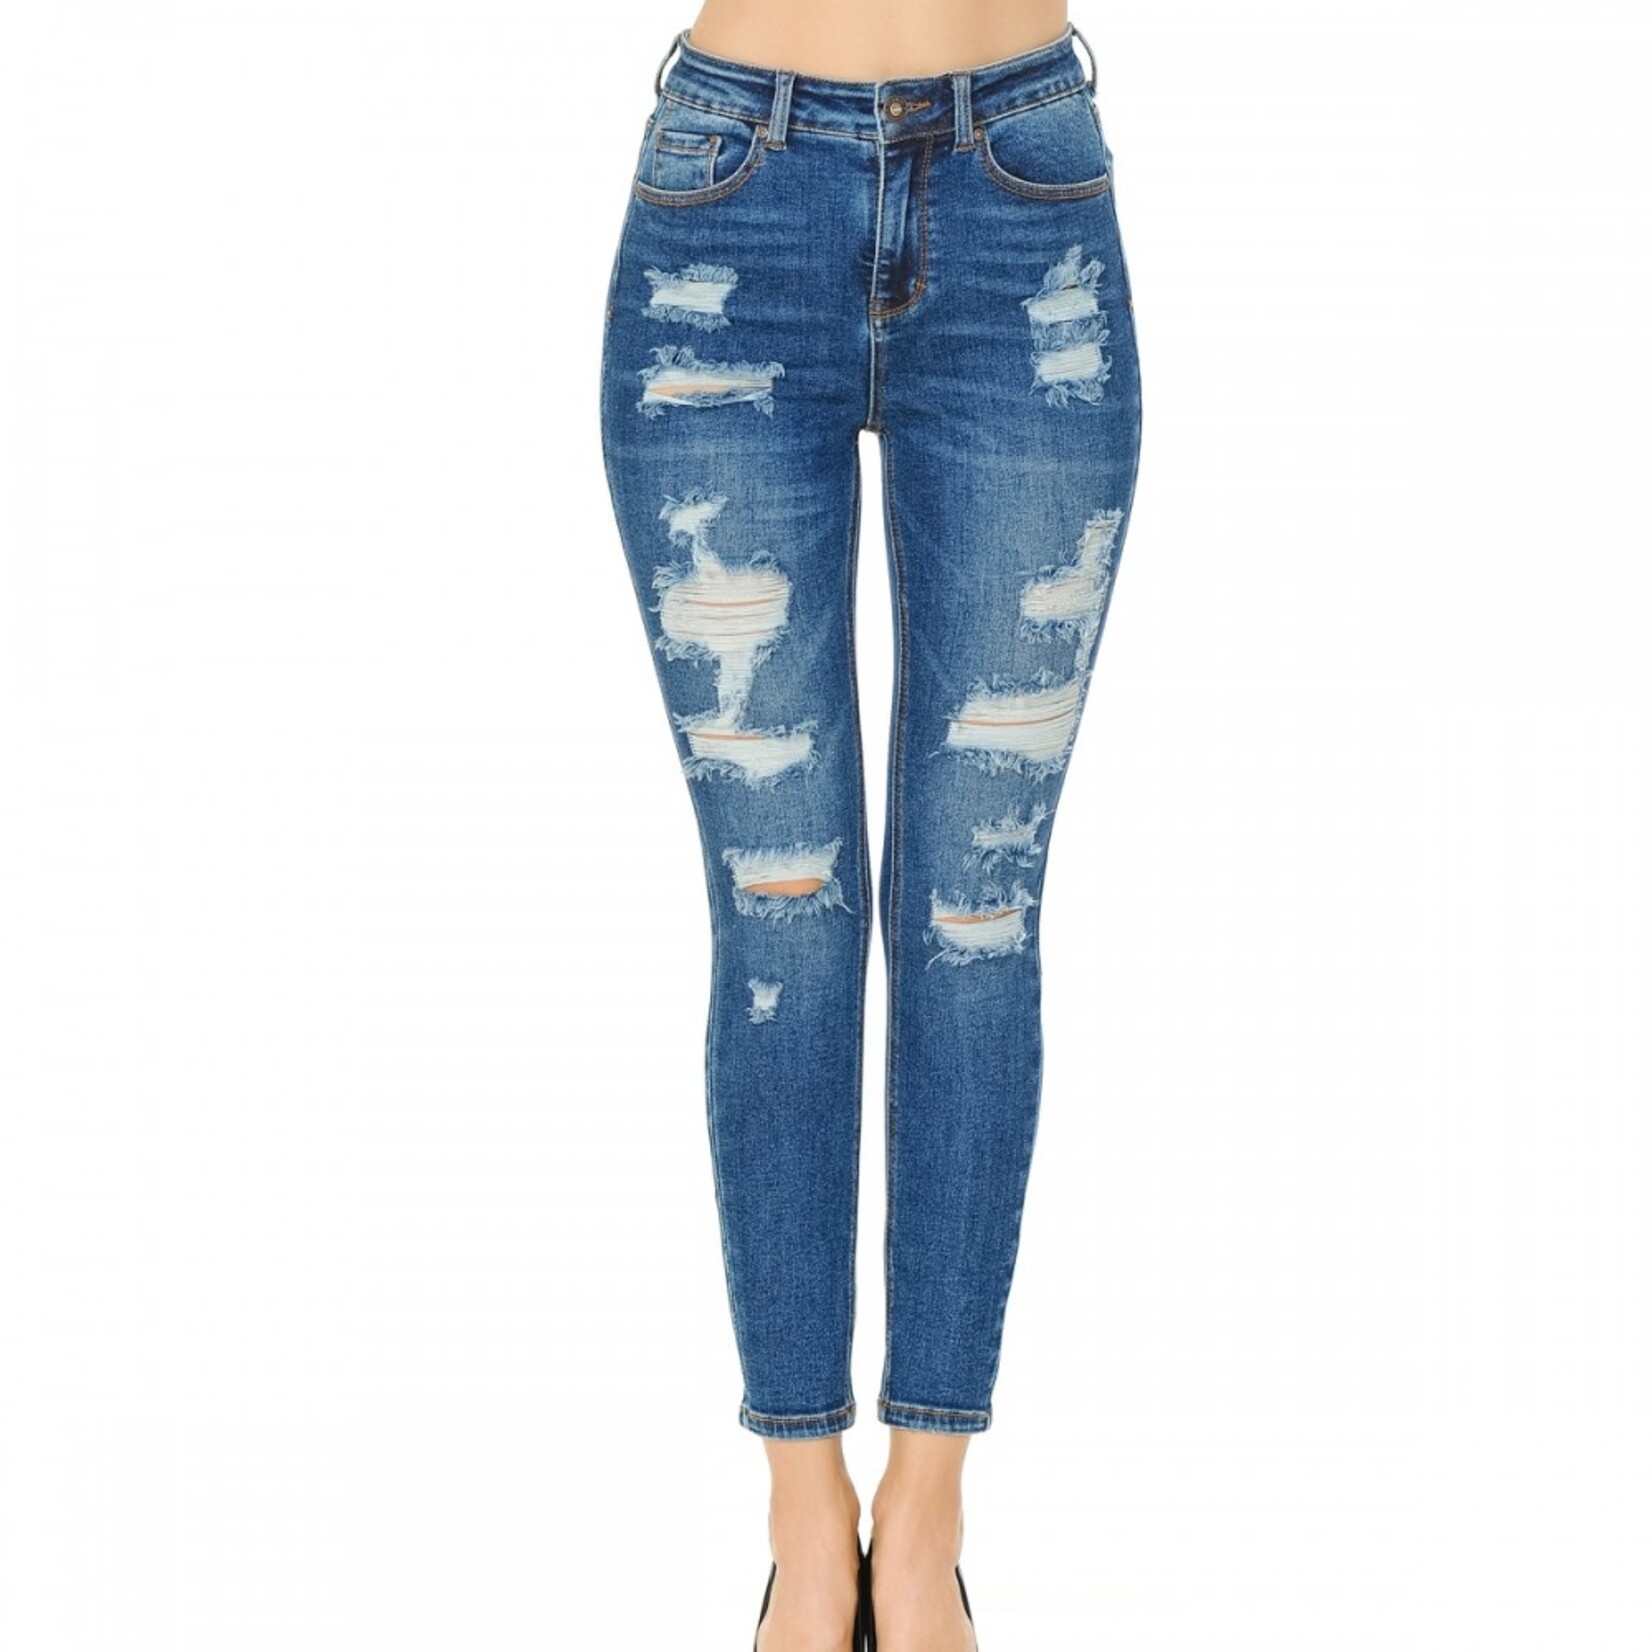 Wax Jeans Wax Jeans Women’s Vintage-Inspired Destructed Ankle Skinny Jean - 90187